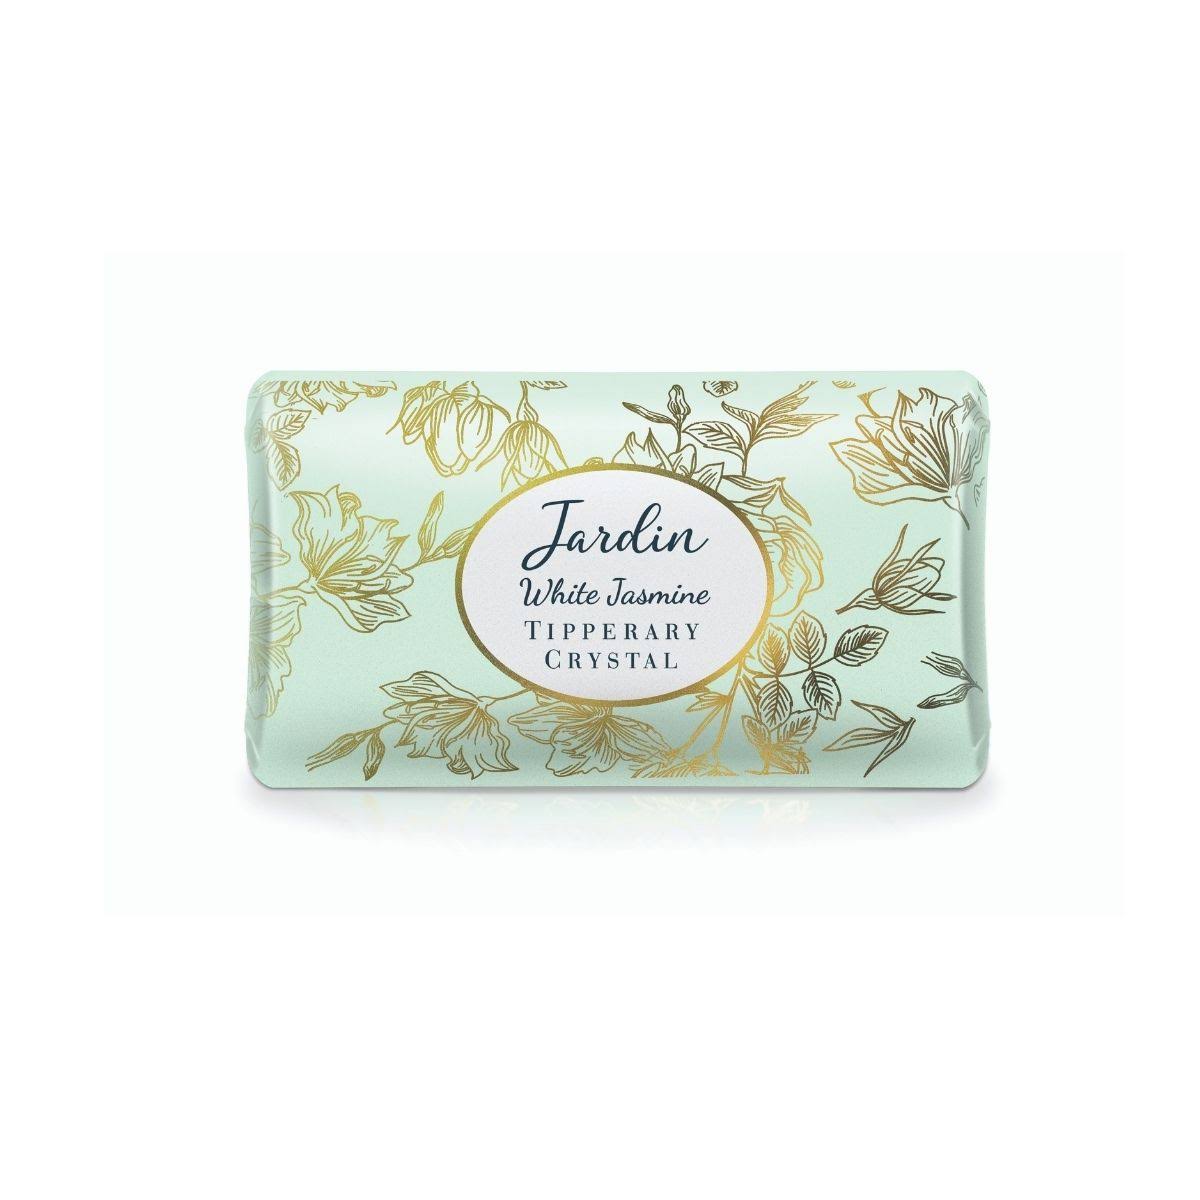 Tipperary Crystal Jardin White Jasmine Soap